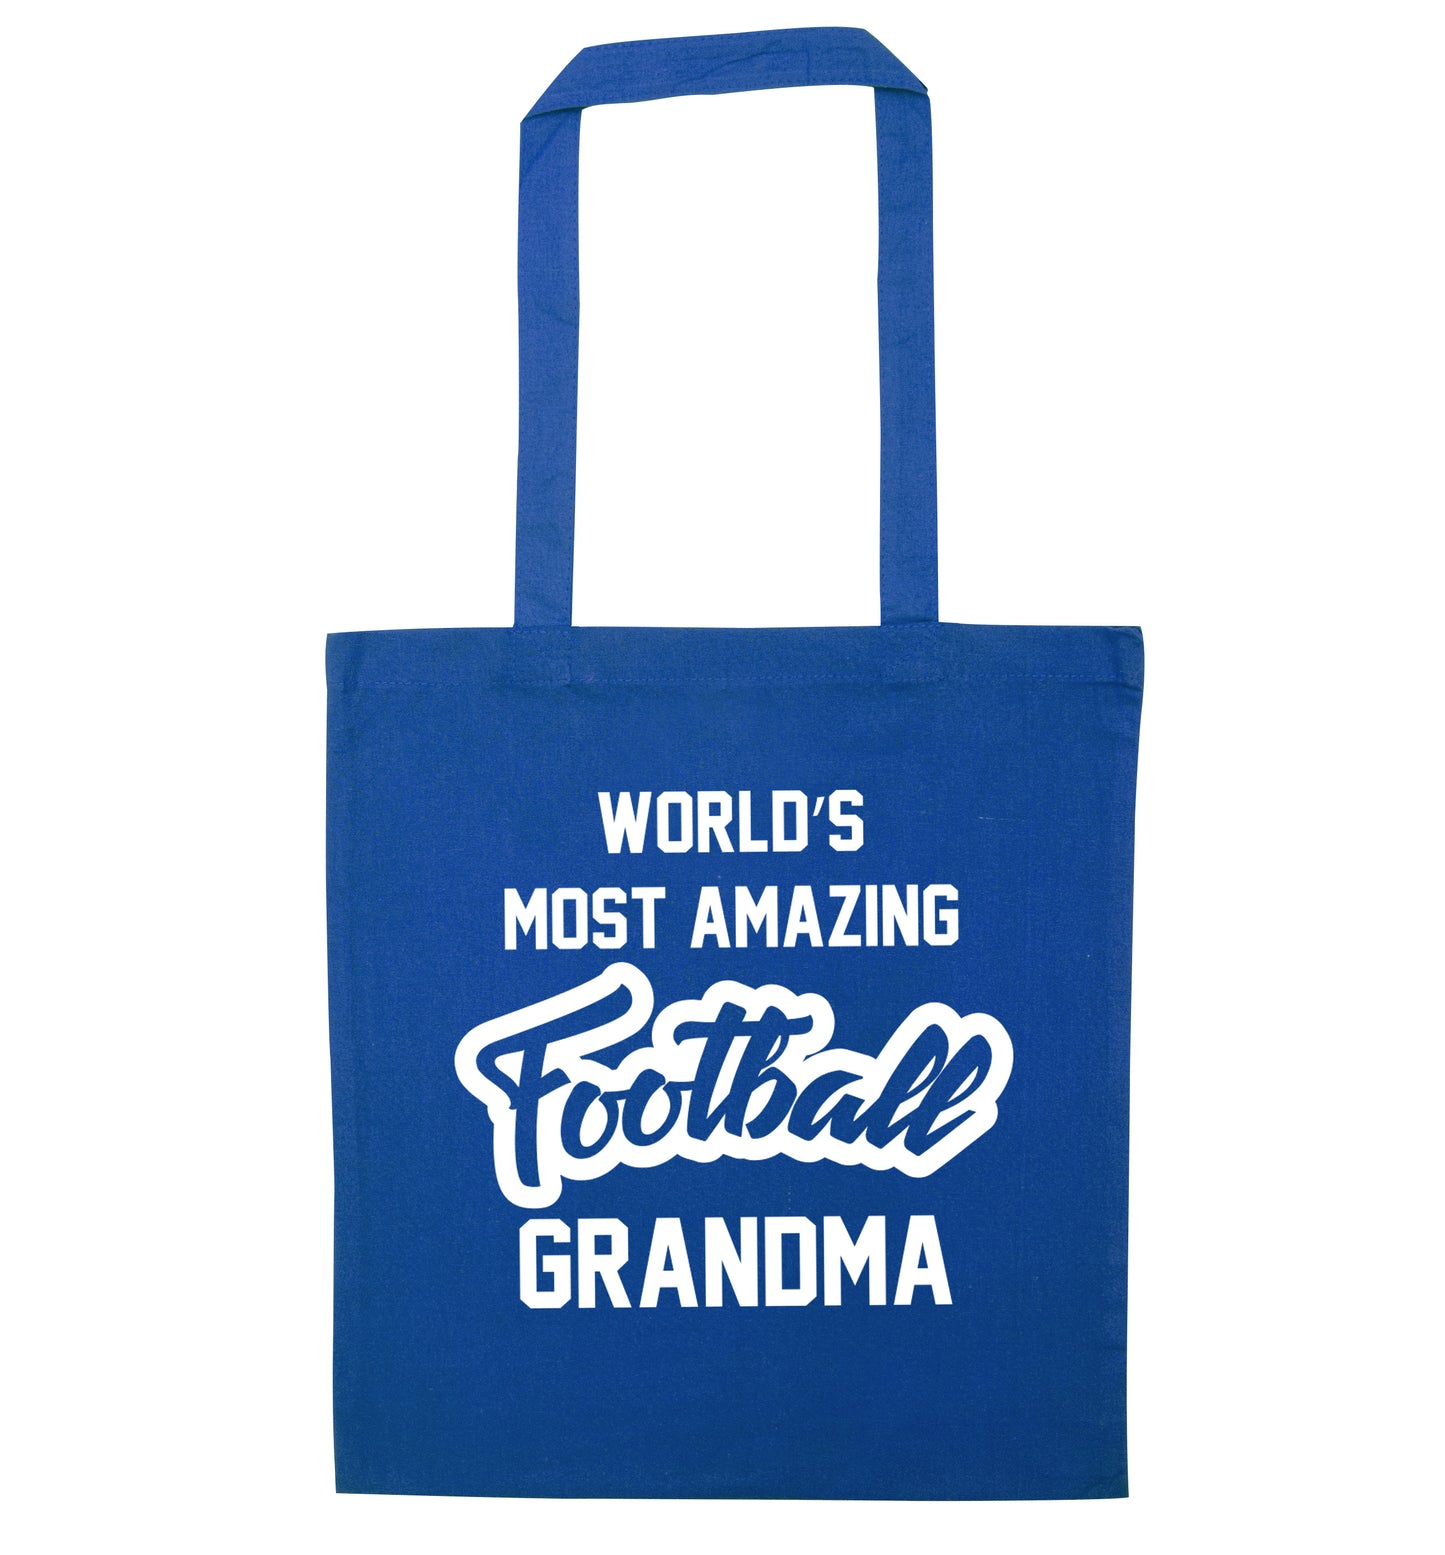 Worlds most amazing football grandma blue tote bag